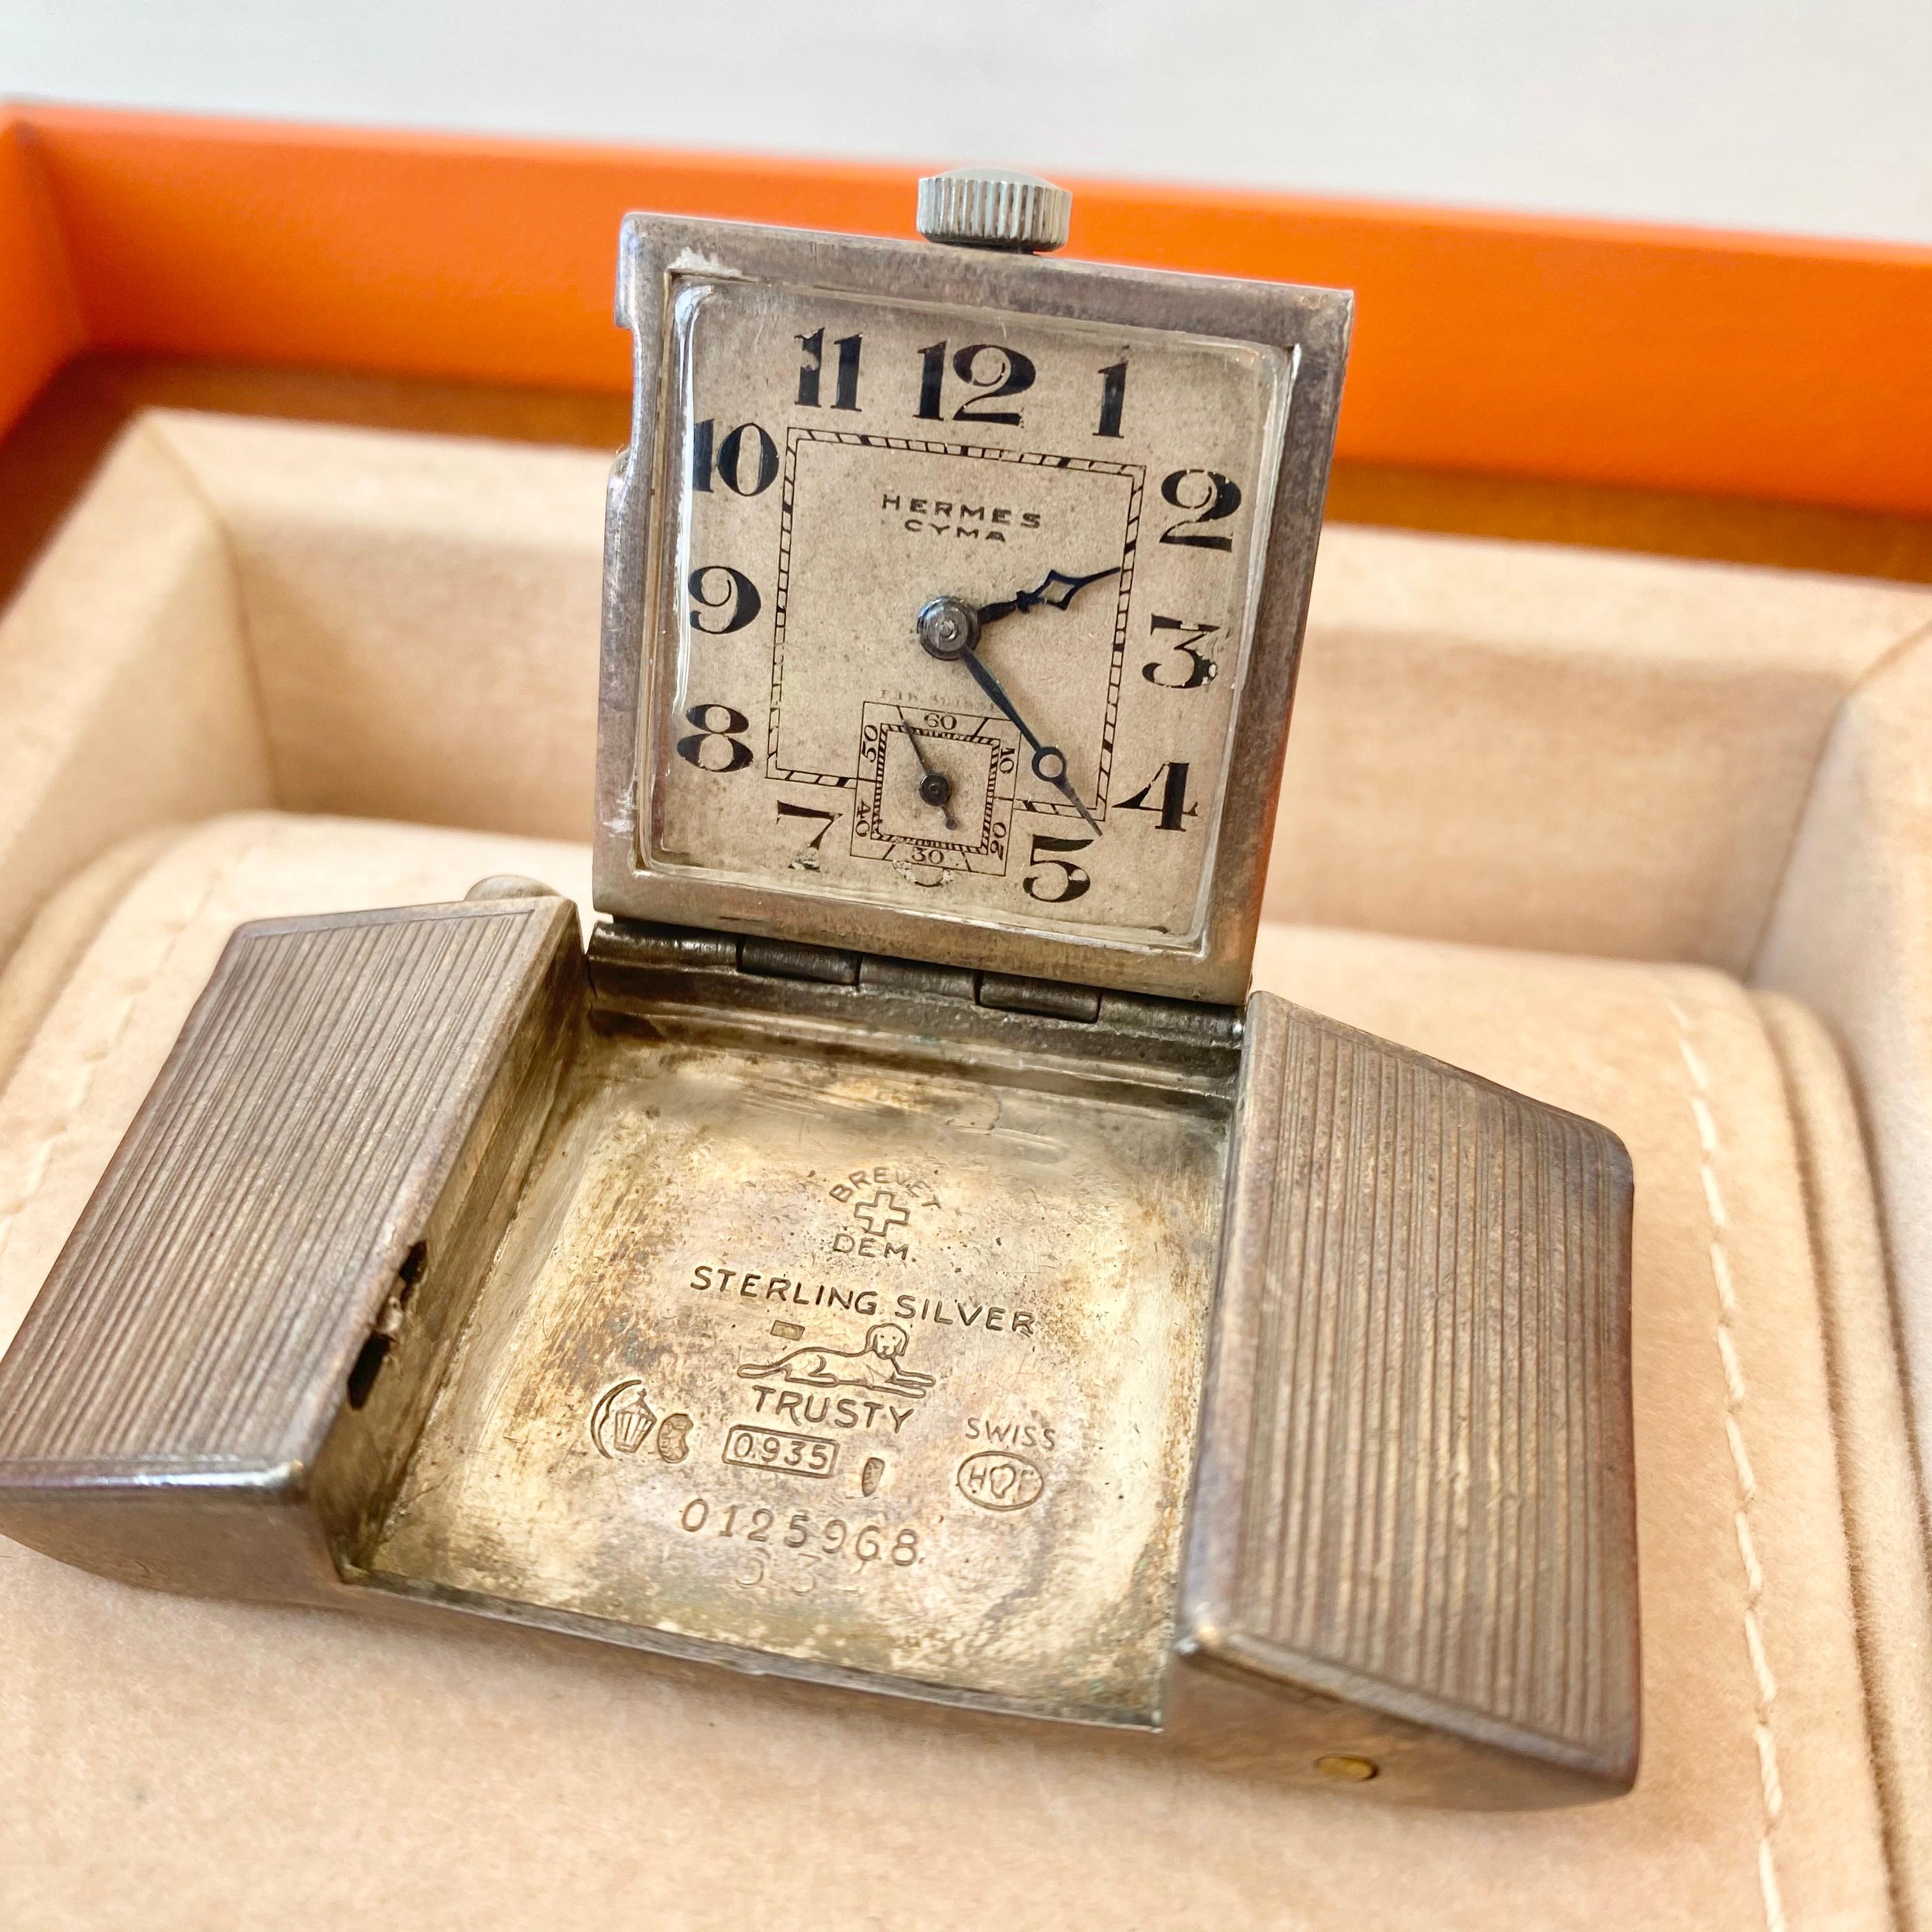 Mid-20th Century Hermès Belt Buckle Watch from 1930s